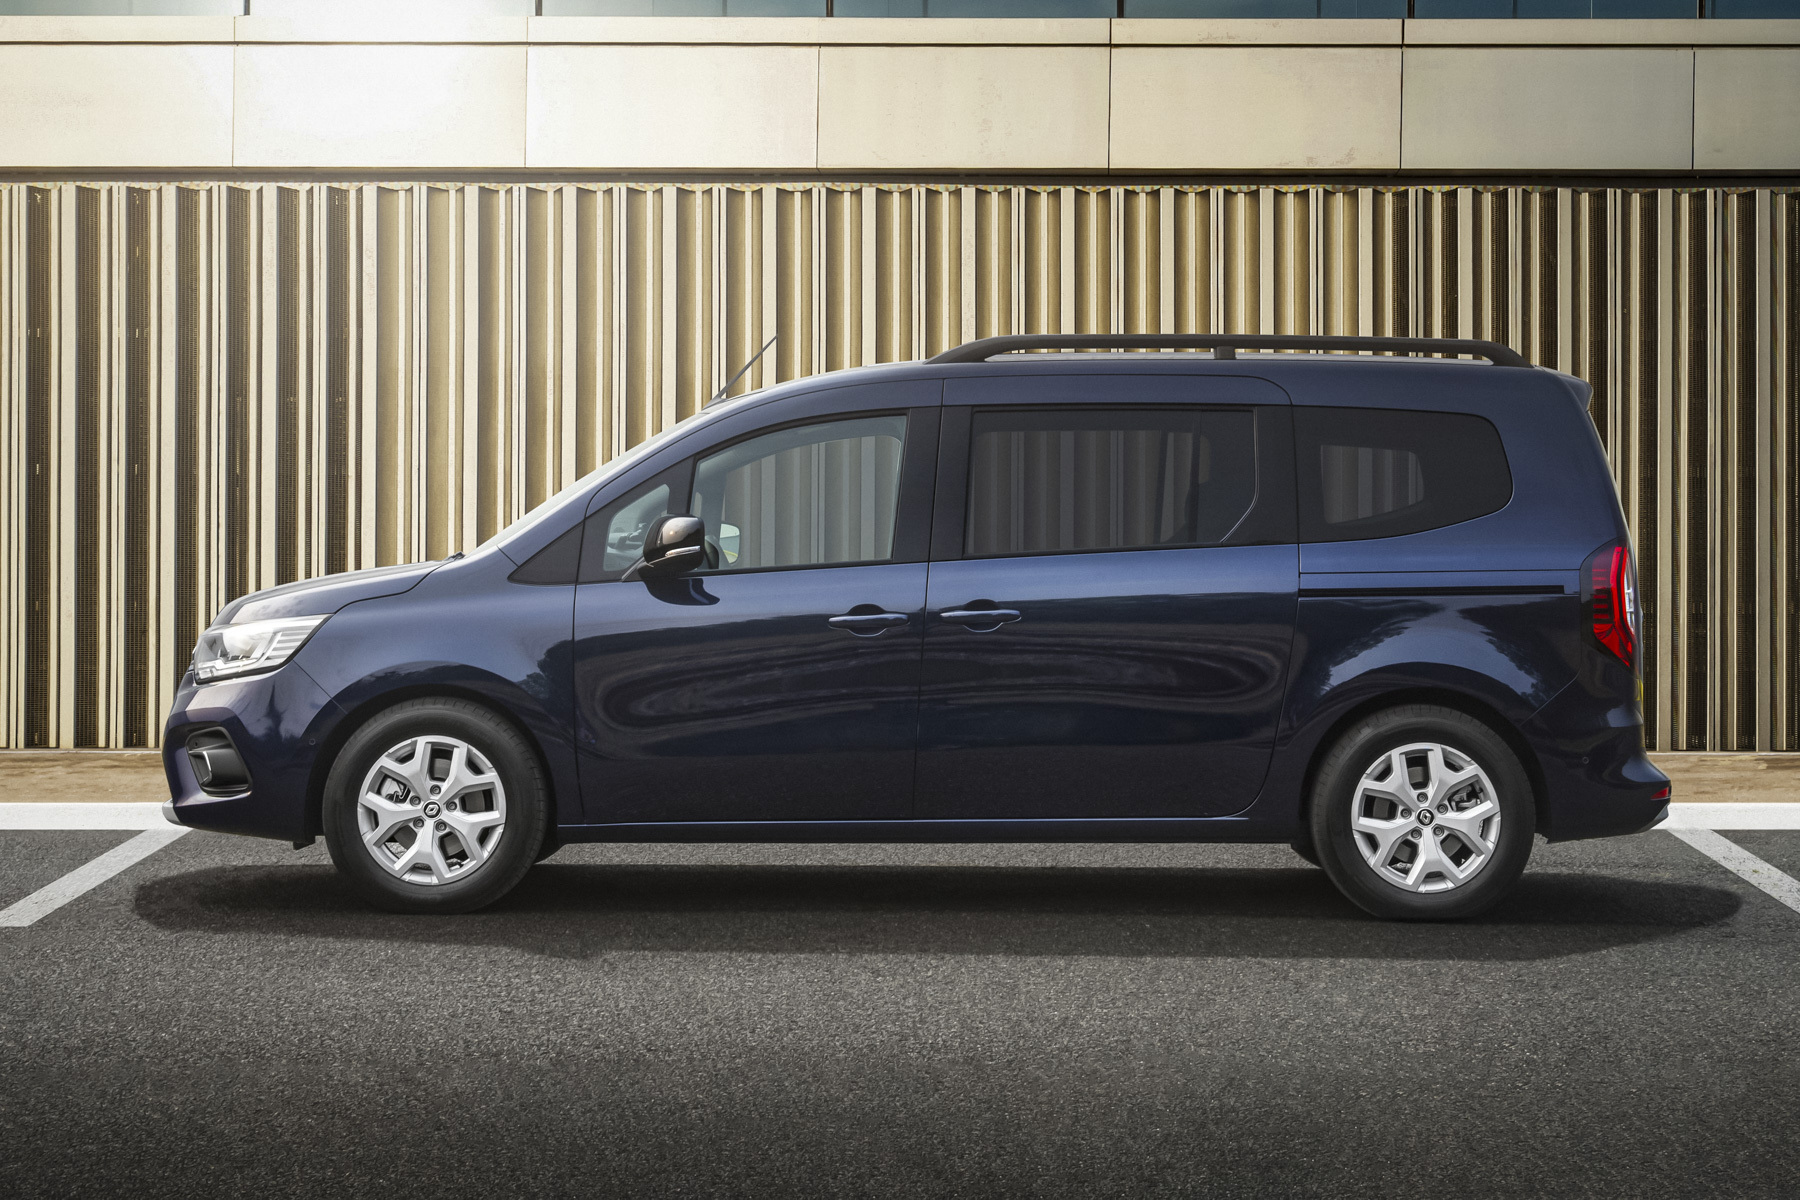 Renault showed a new seven-seat minivan Grand Kangoo